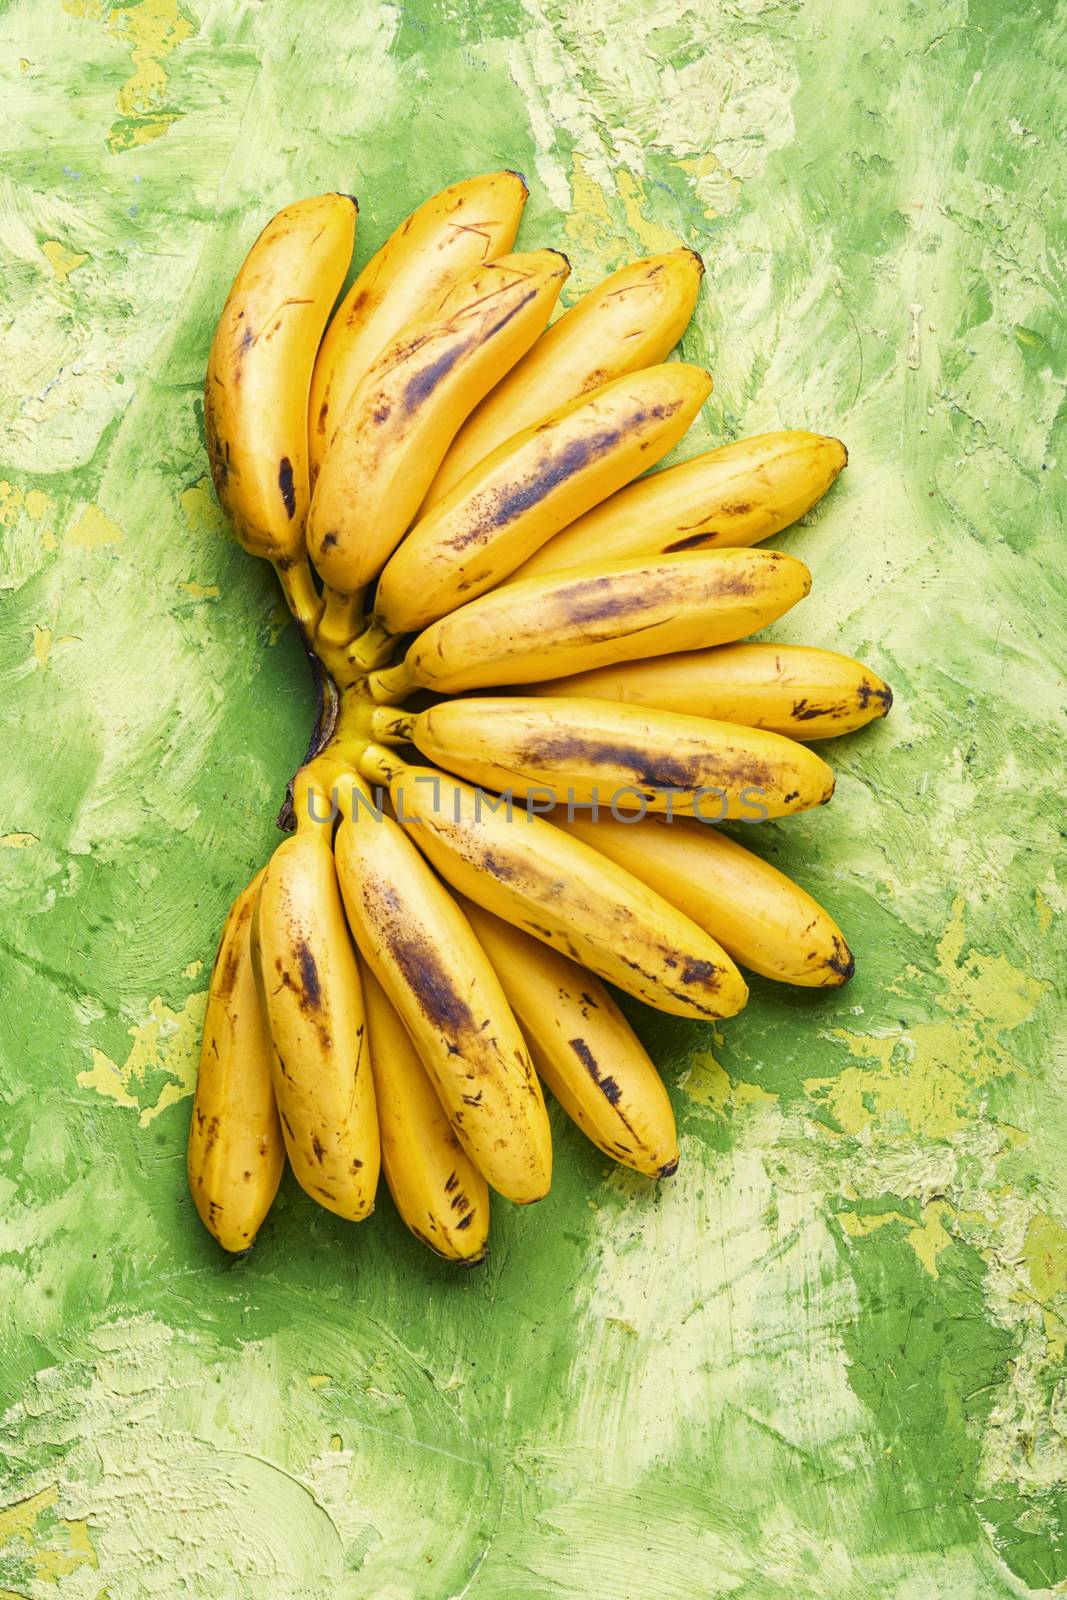 Ripe unpeeled bananas. by LMykola